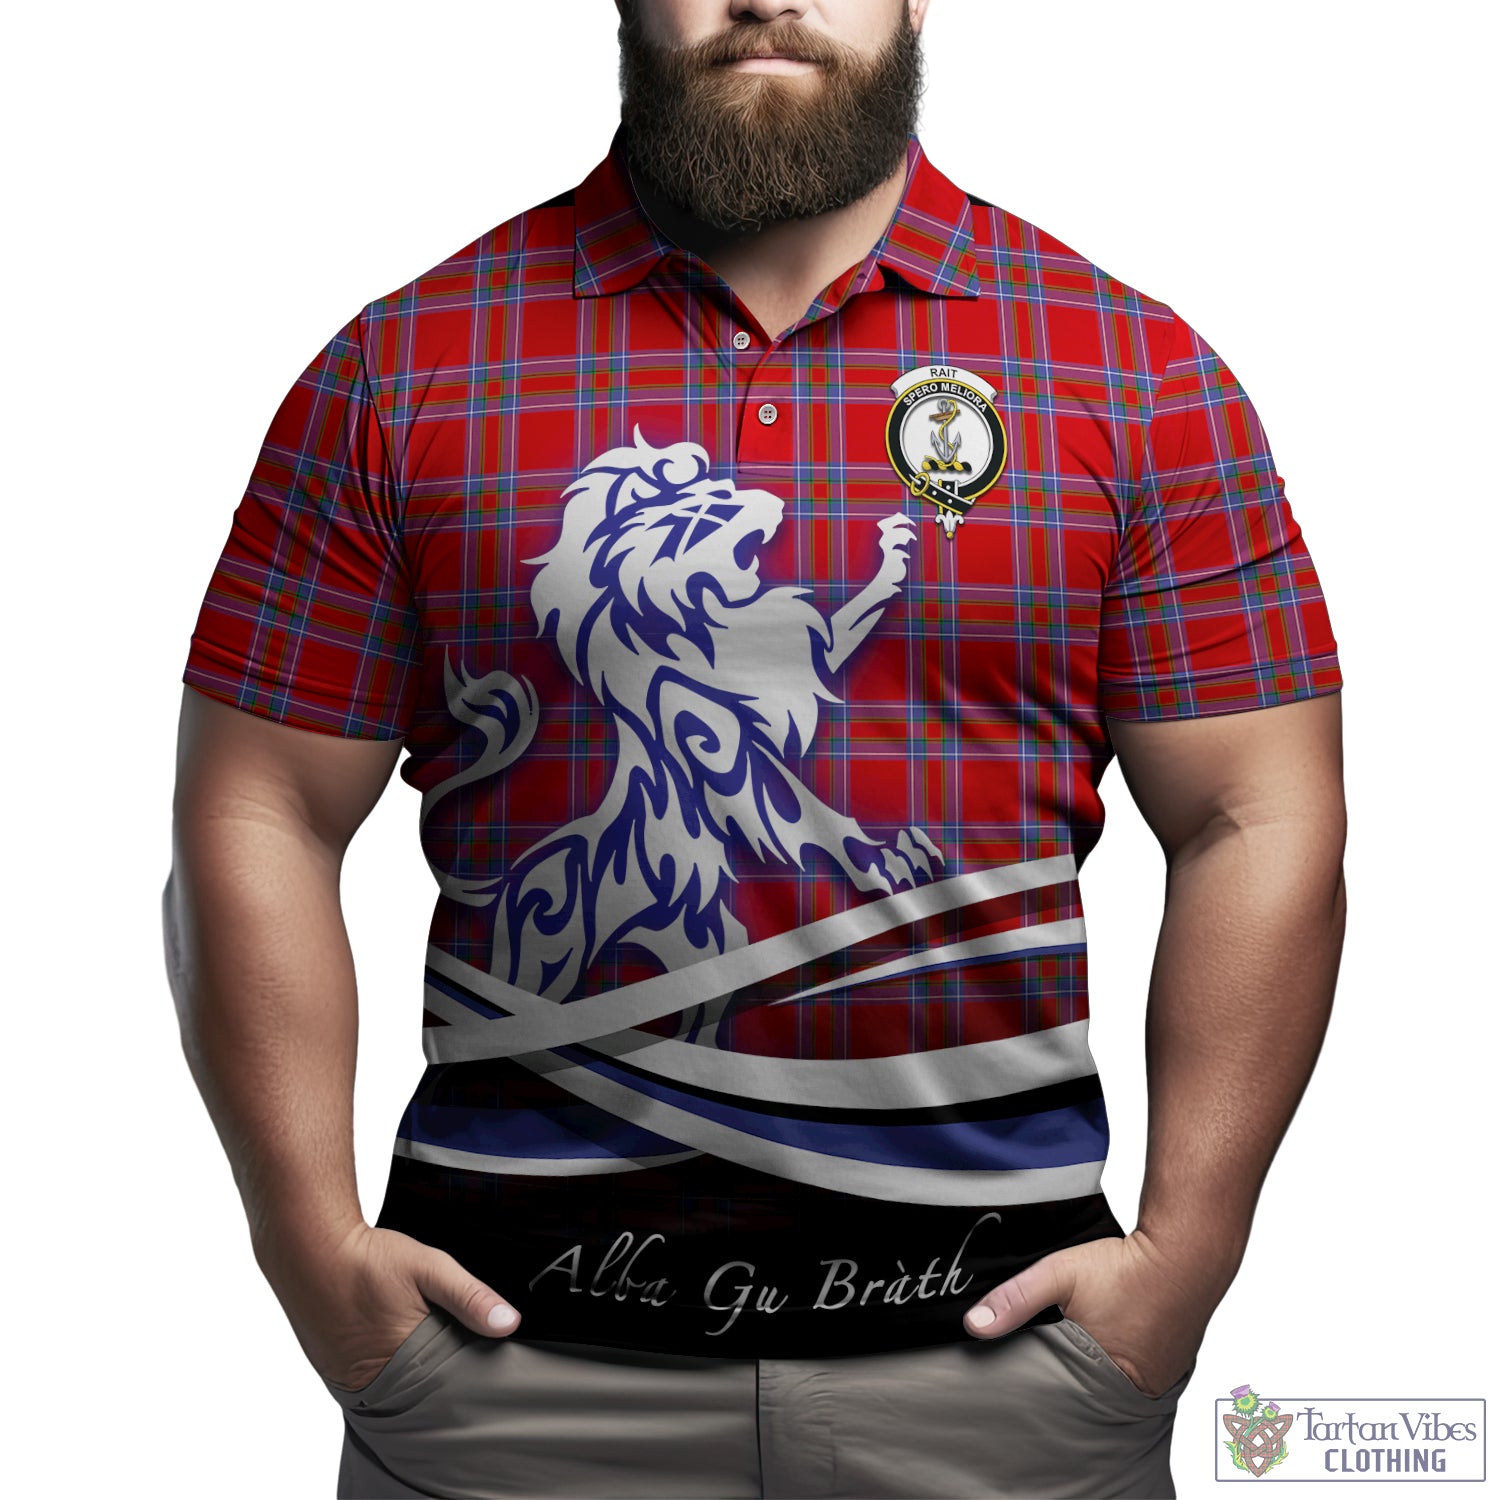 rait-tartan-polo-shirt-with-alba-gu-brath-regal-lion-emblem